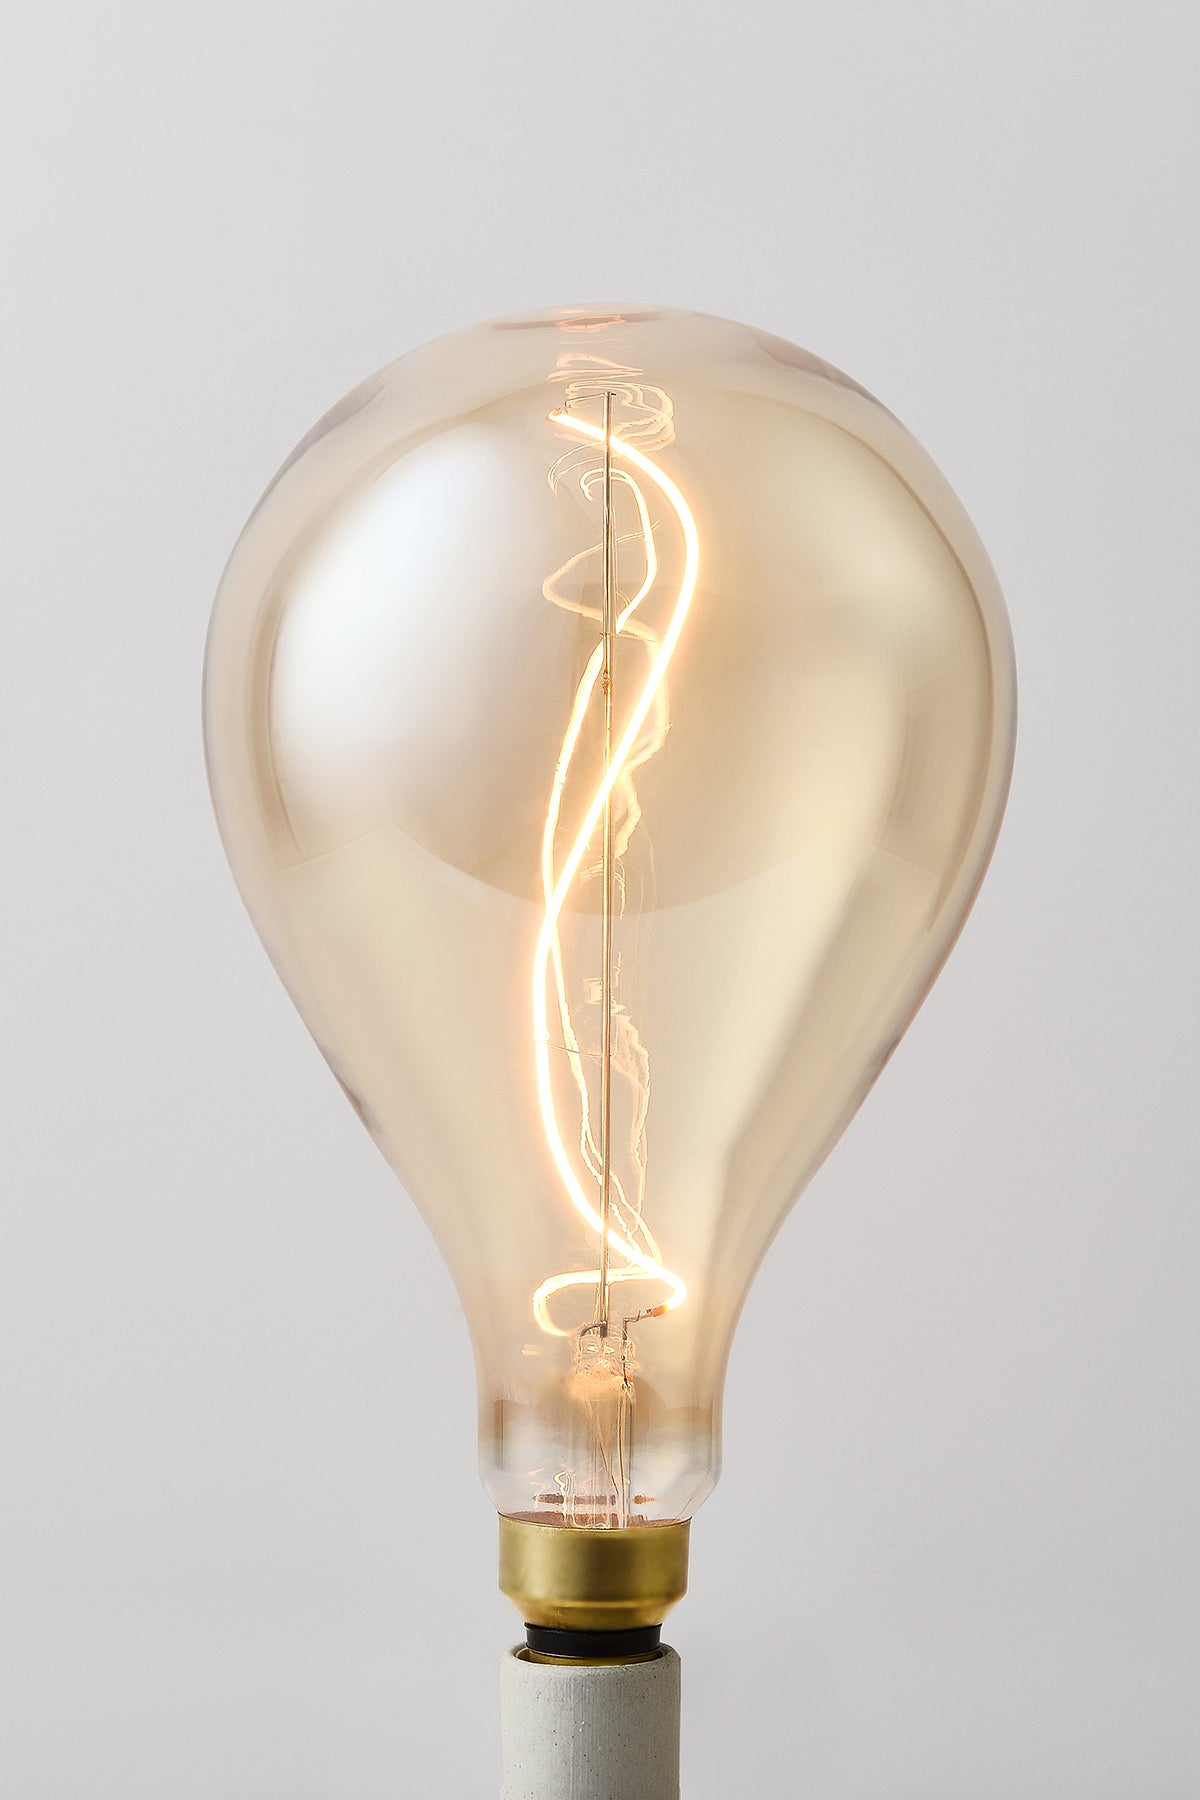 Modern teardrop LED light bulb with warm vintage Edison style glow